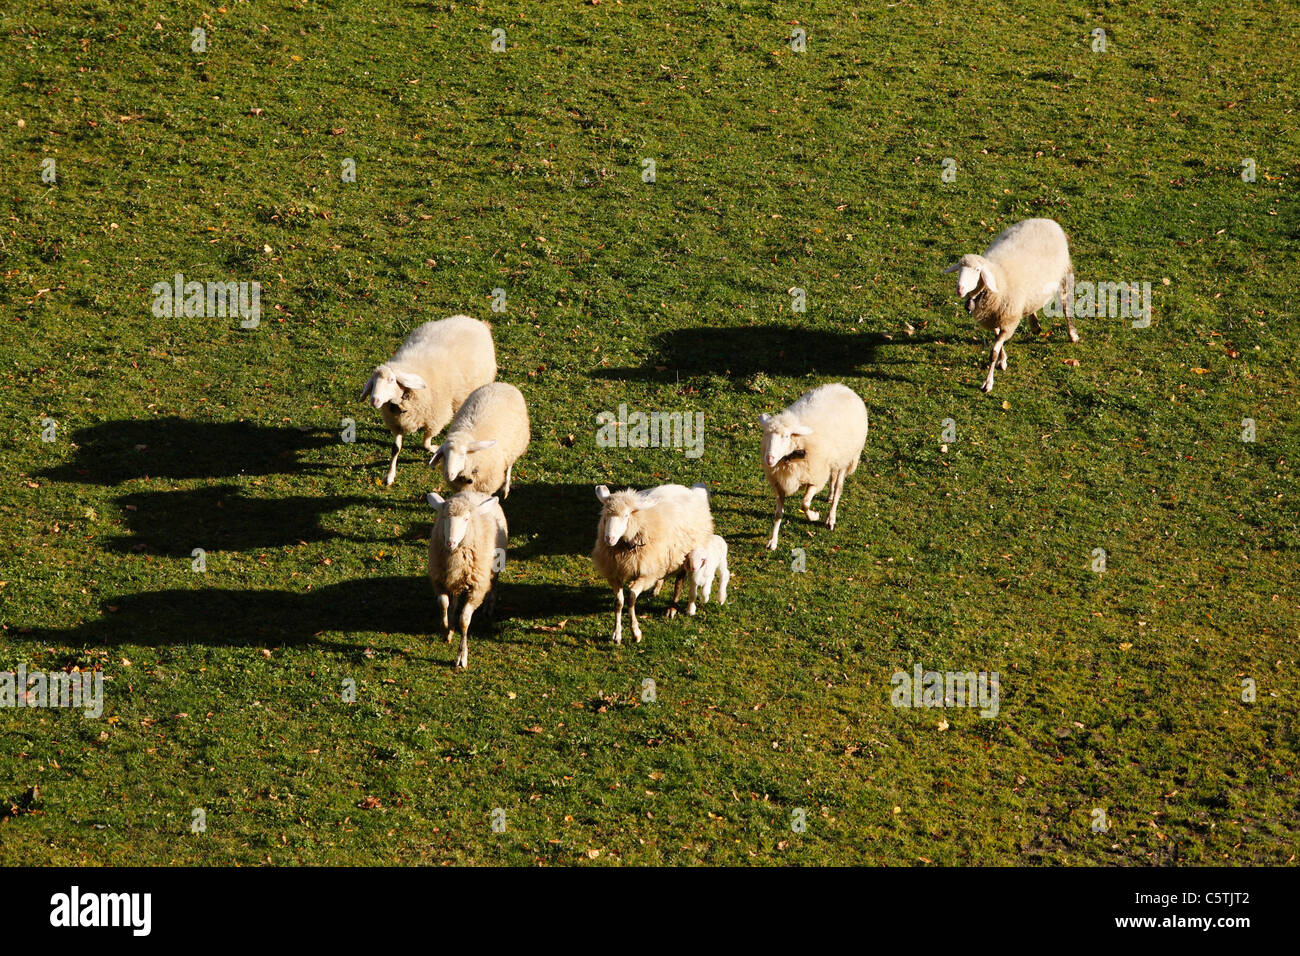 Germany, Bavaria, Kreuth, Flock of sheep walking on grass Stock Photo